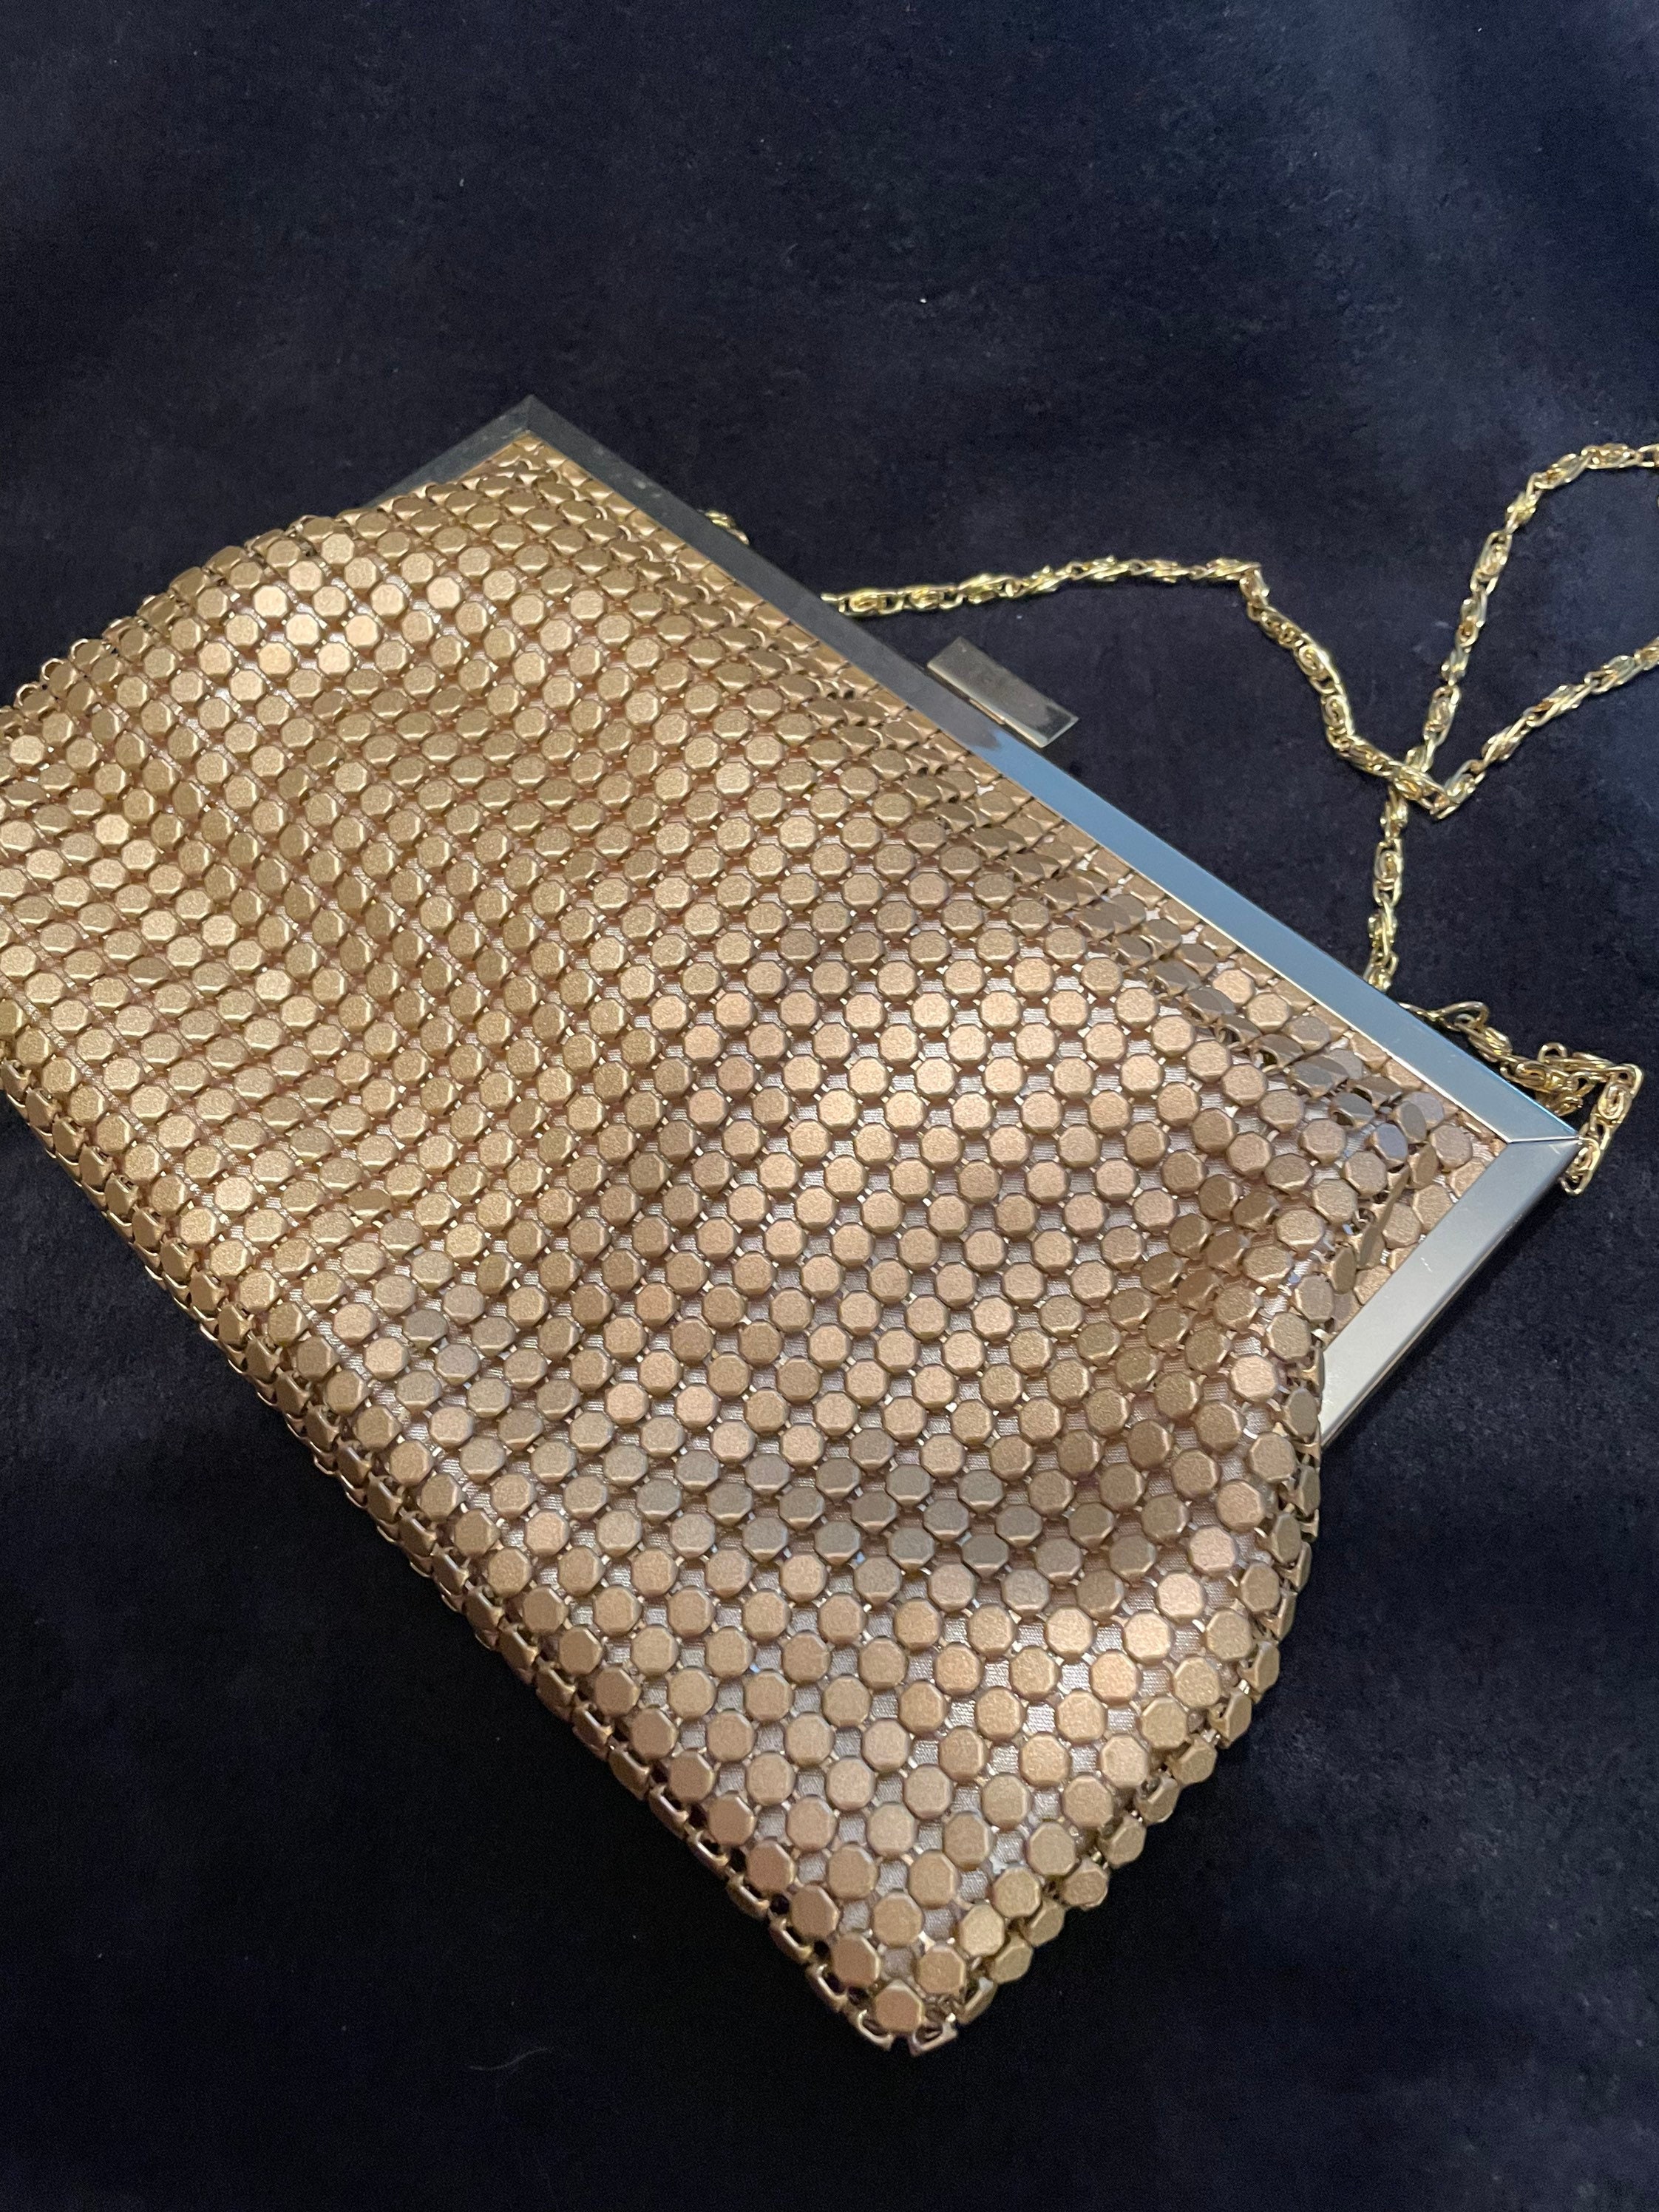 Vintage Le Regale Copper Woven Evening Handbag Purse with Hard Case-  vintage evening bag, woven gold and copper handbag, Le Regale purse